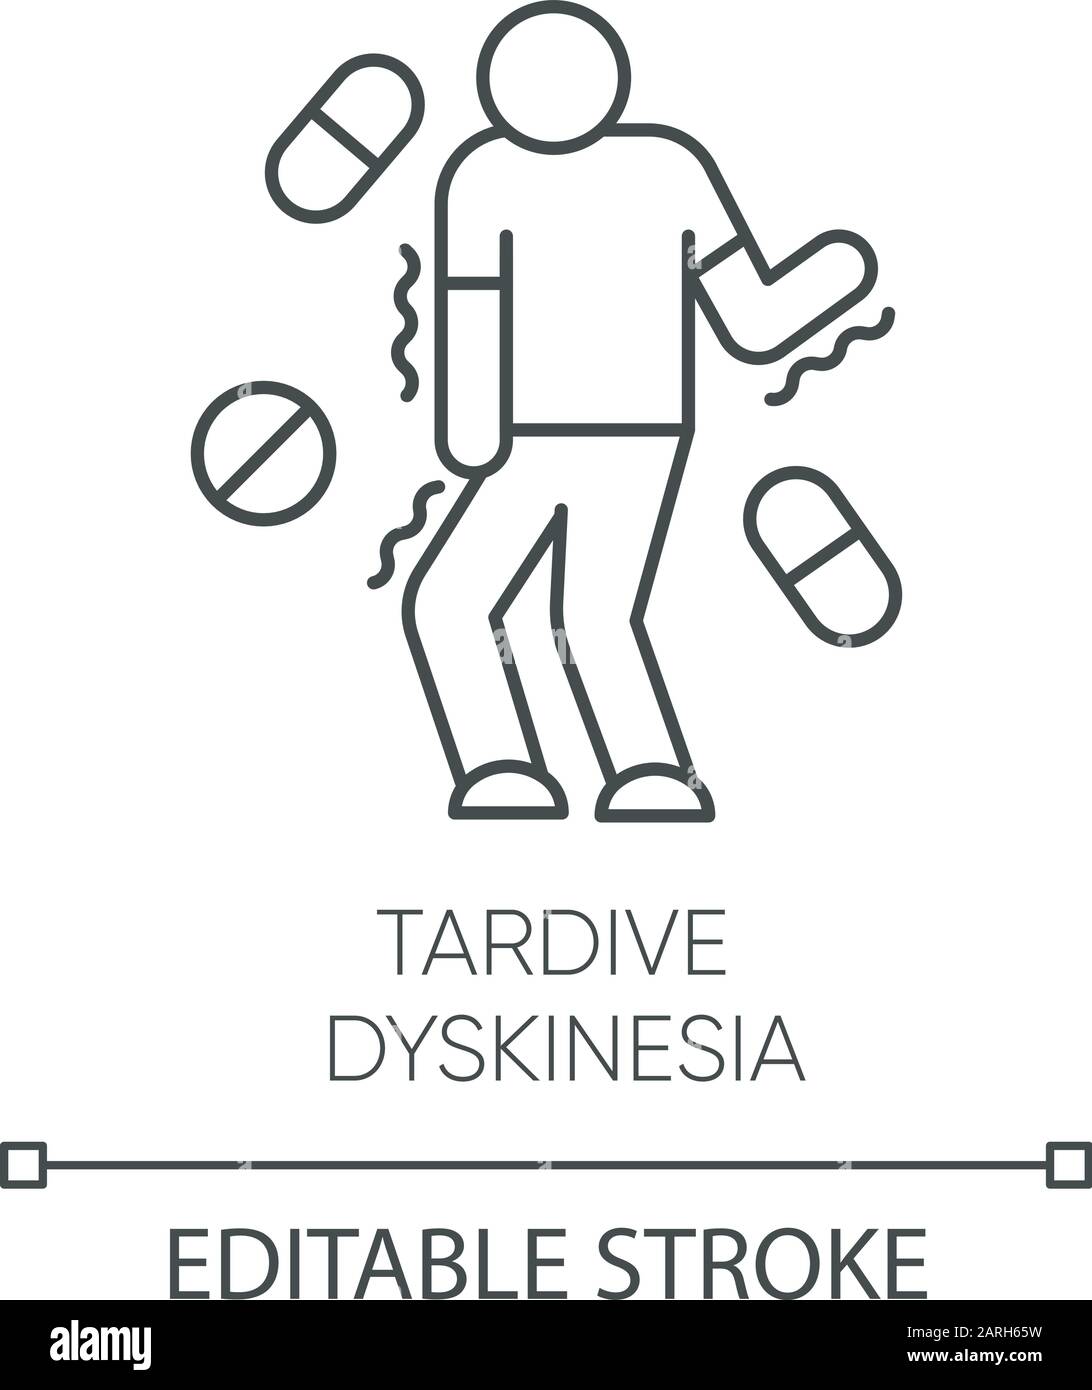 Tardive dyskinesia linear icon. Tremor from medication. Movement problem. Chorea, athetosis. Mental disorder. Thin line illustration. Contour symbol. Stock Vector